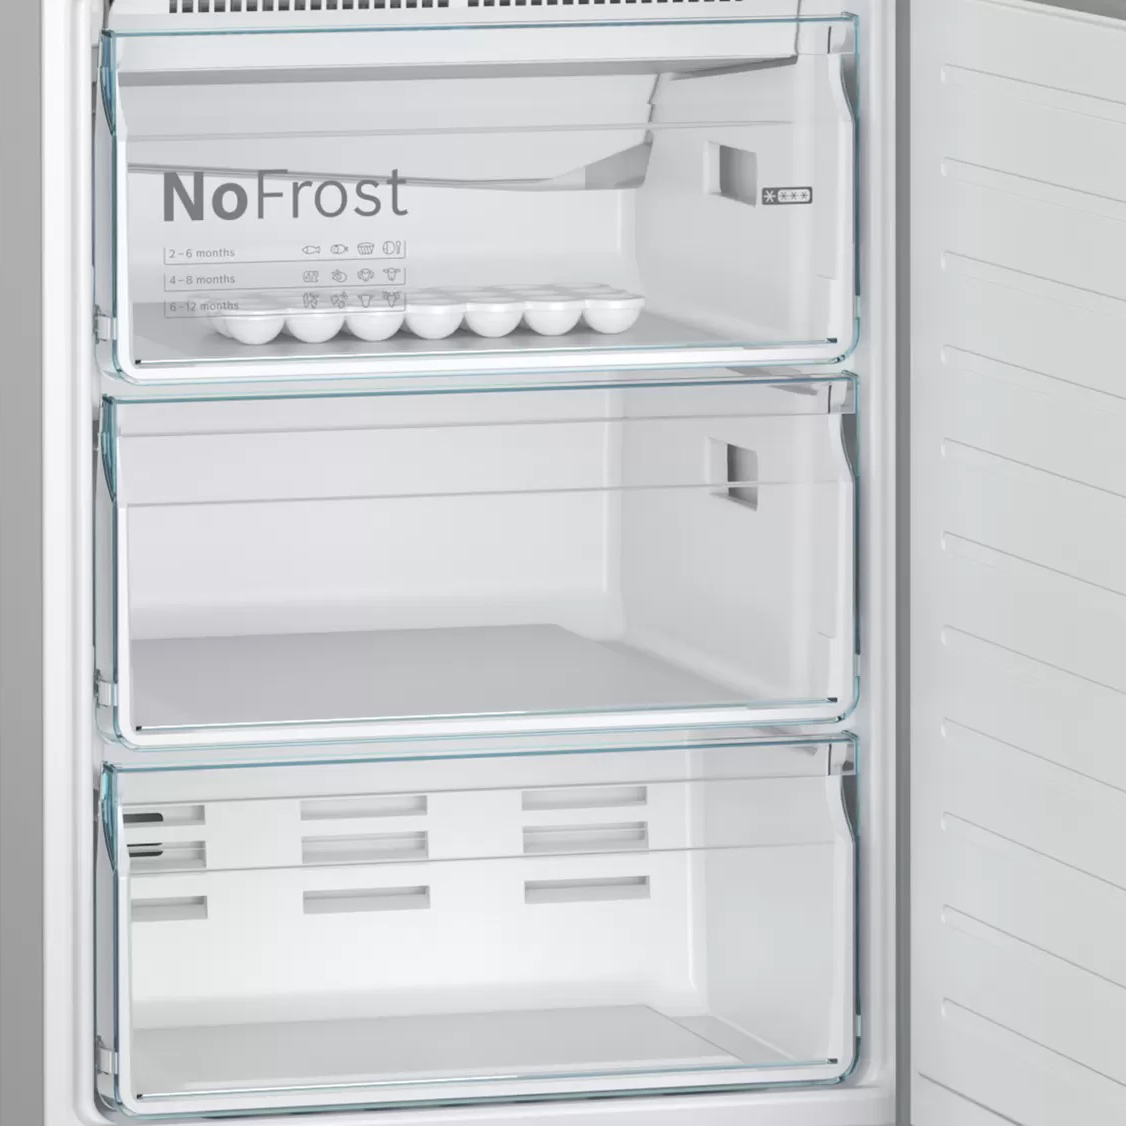 Холодильник Bosch VitaFresh KGN39LQ32R